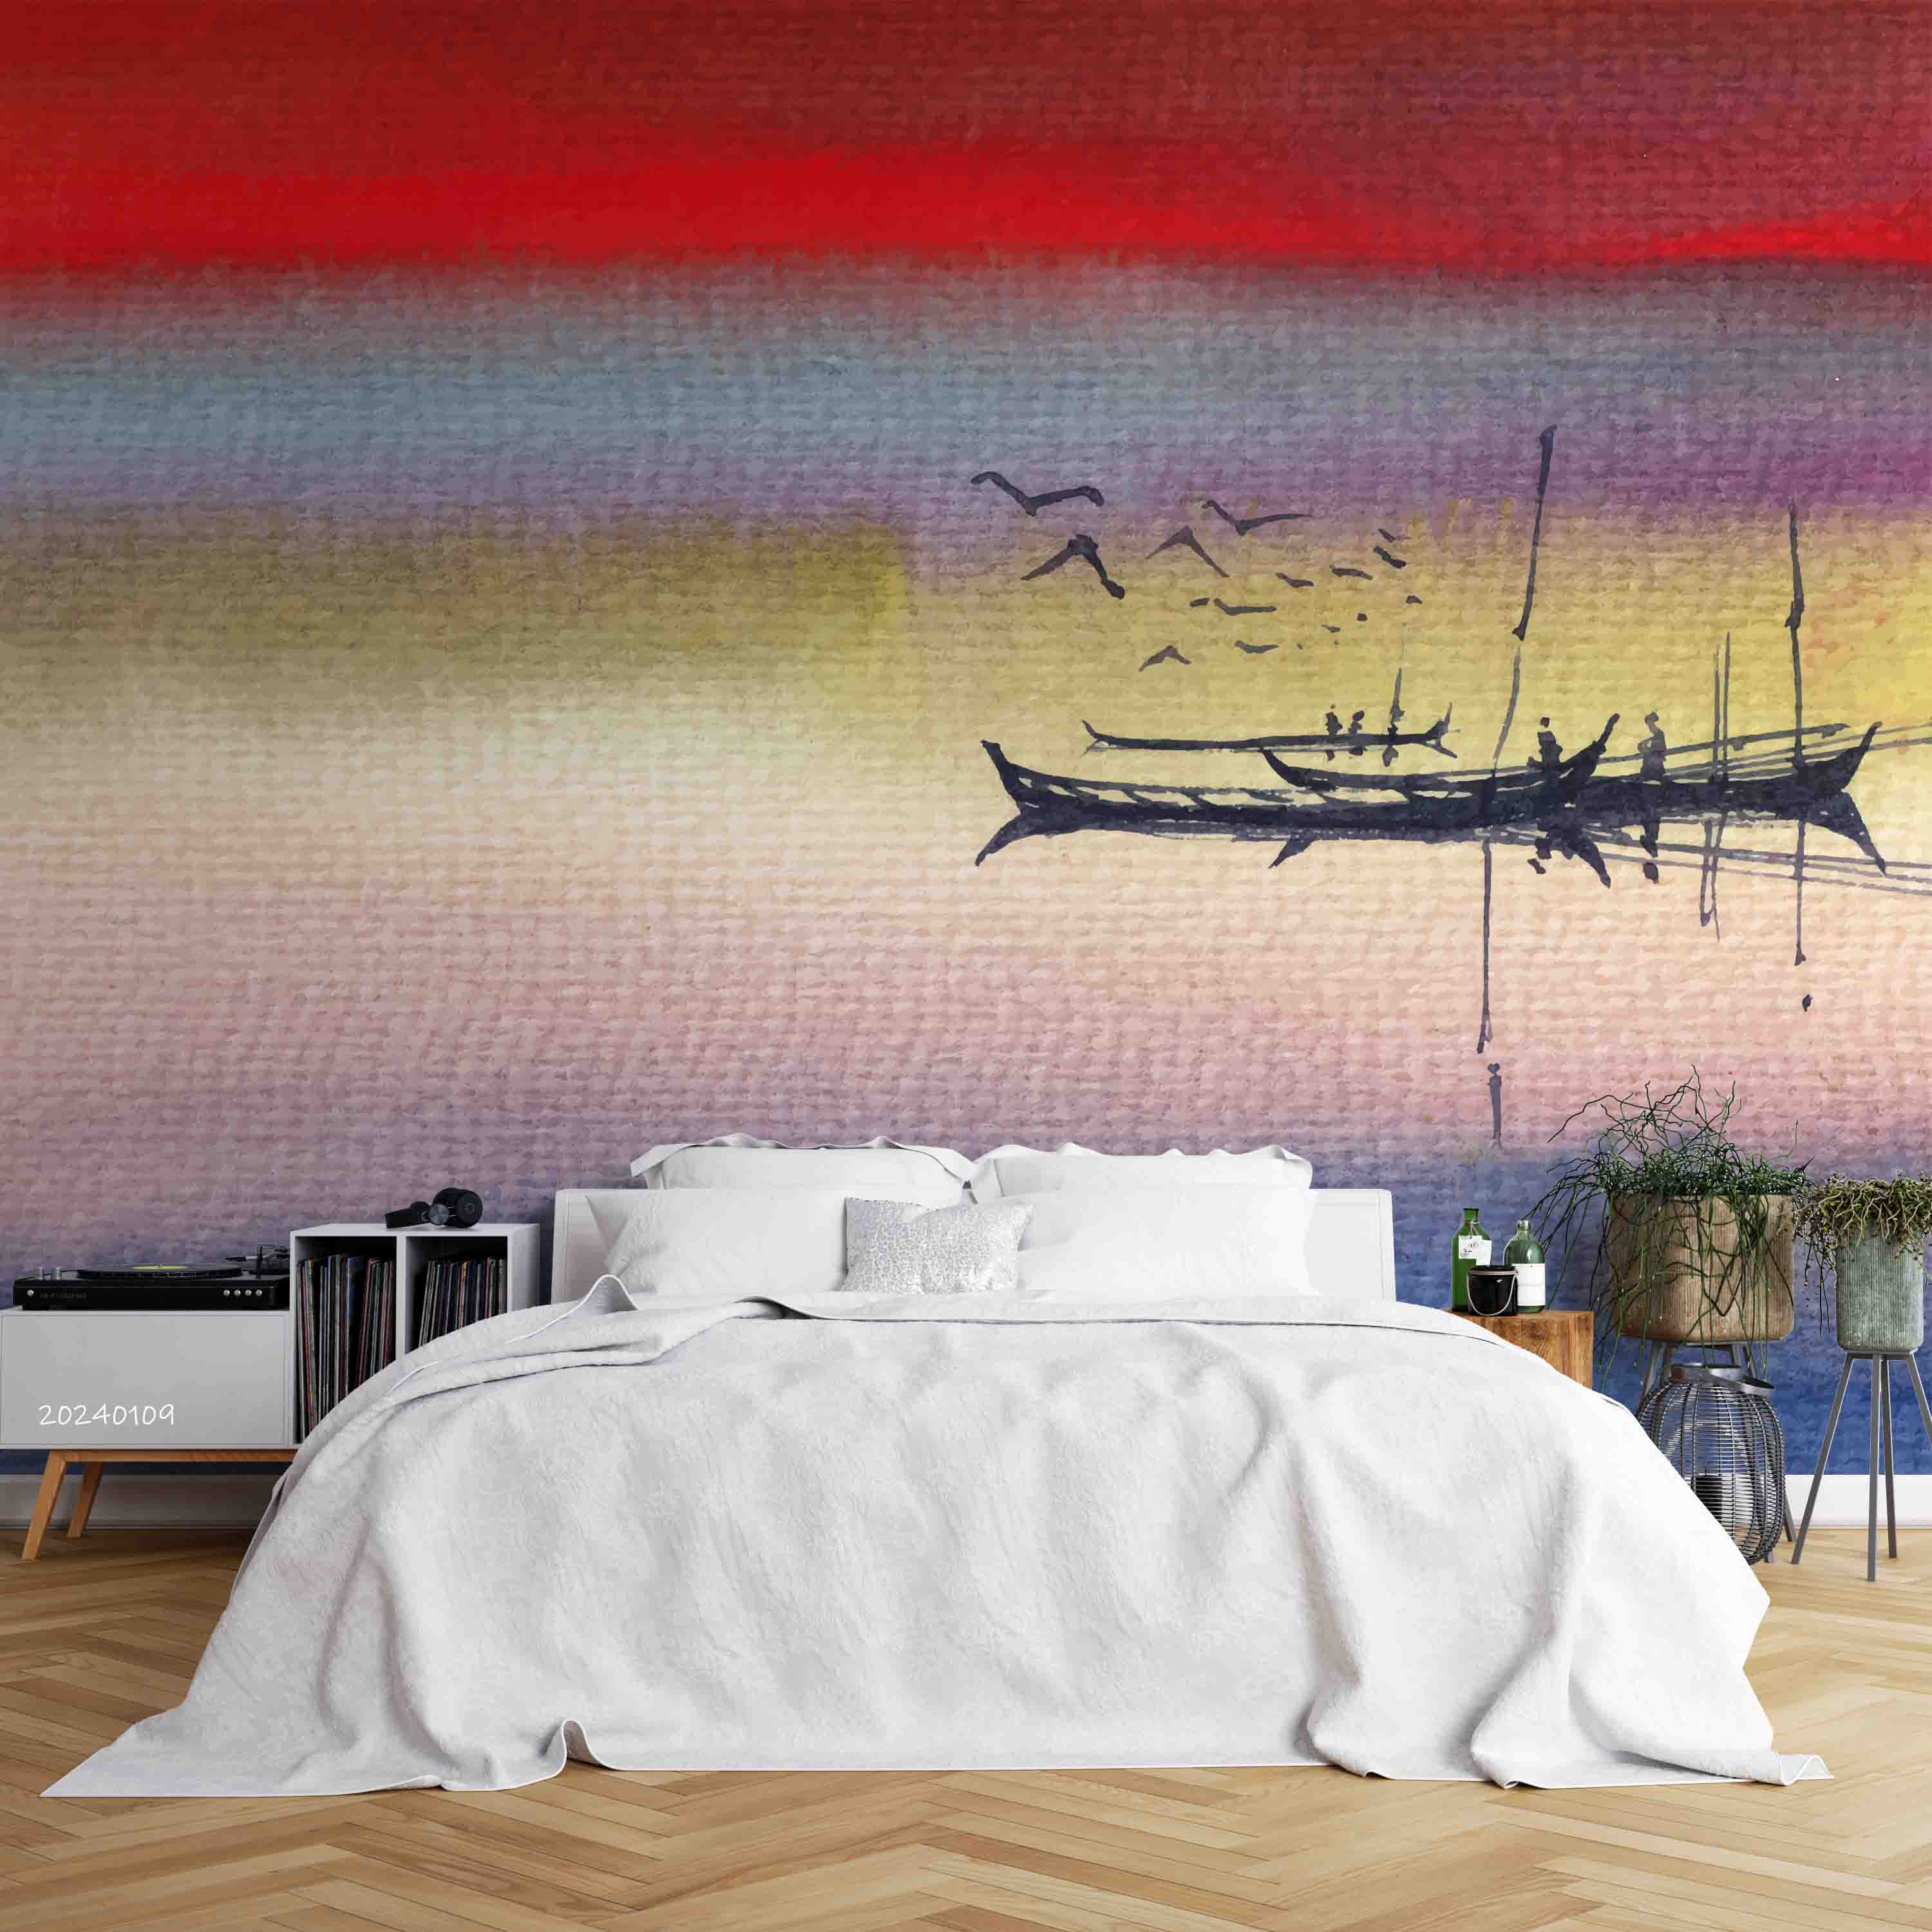 3D Oil Painting Sea Grassland Ship Sea Mew Wall Mural Wallpaper YXL 141